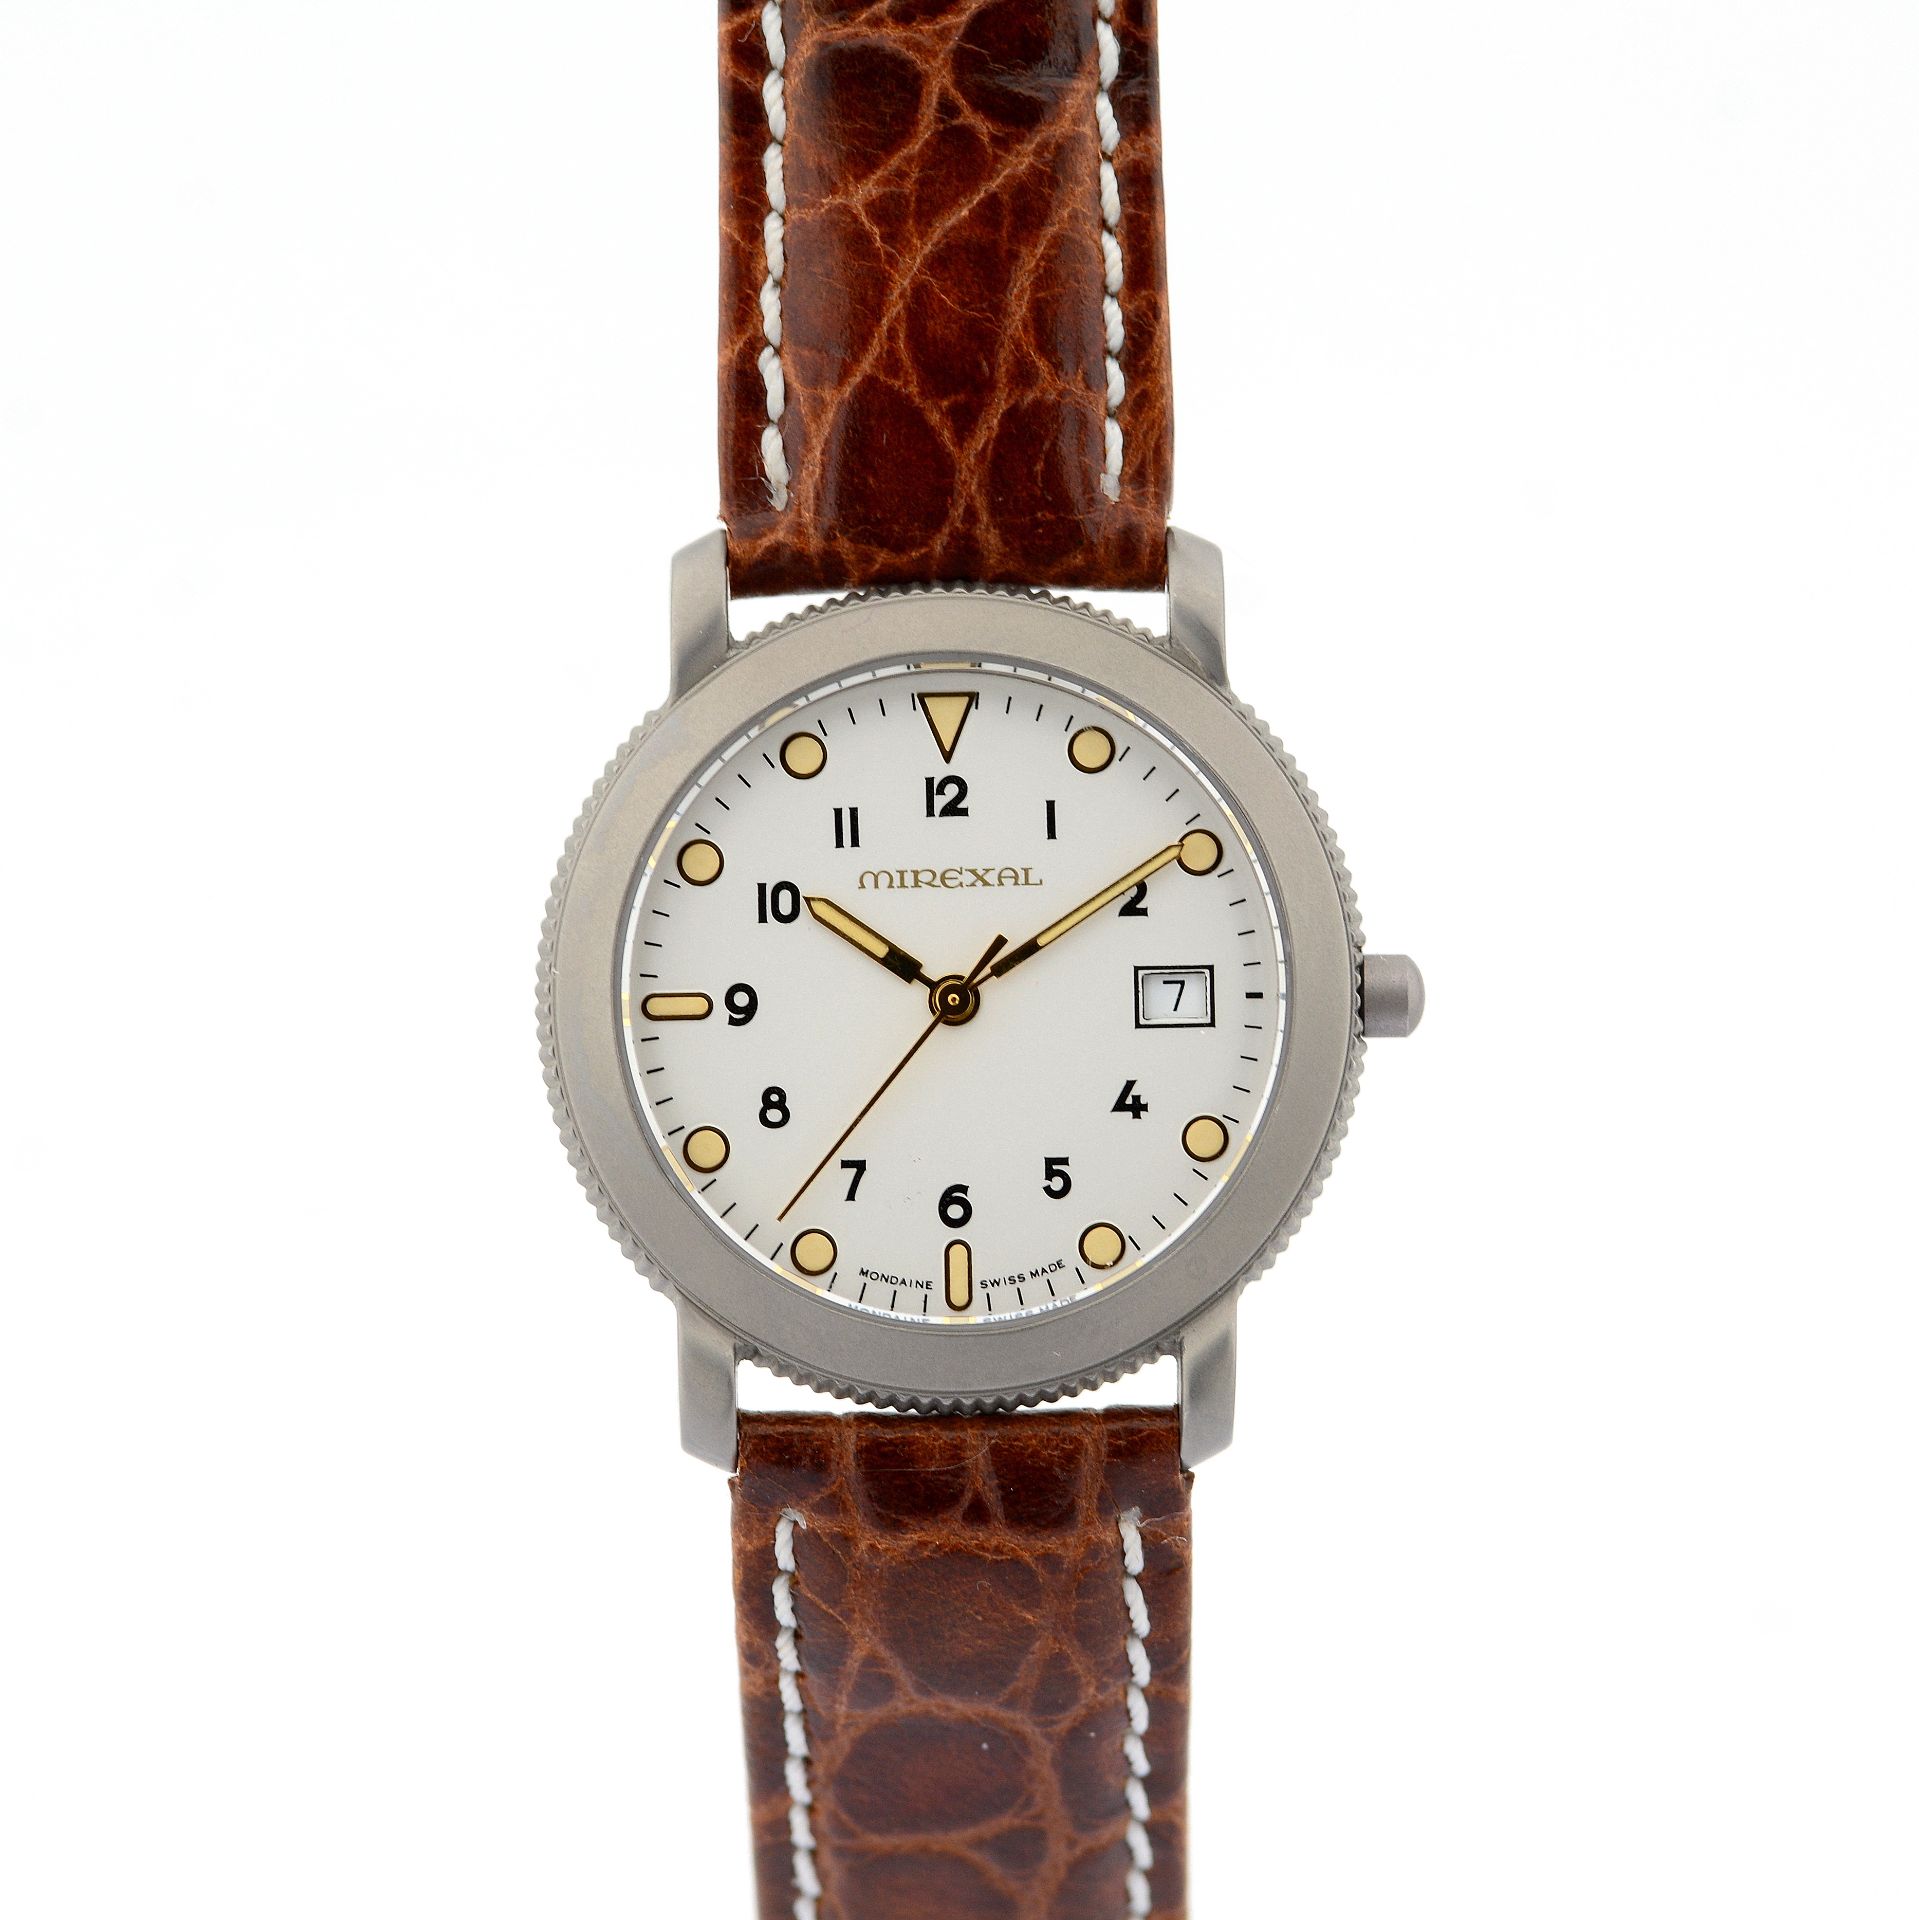 Mondaine / Mirexal Date - (Unworn) Gentlmen's Titanium Wrist Watch - Image 2 of 8